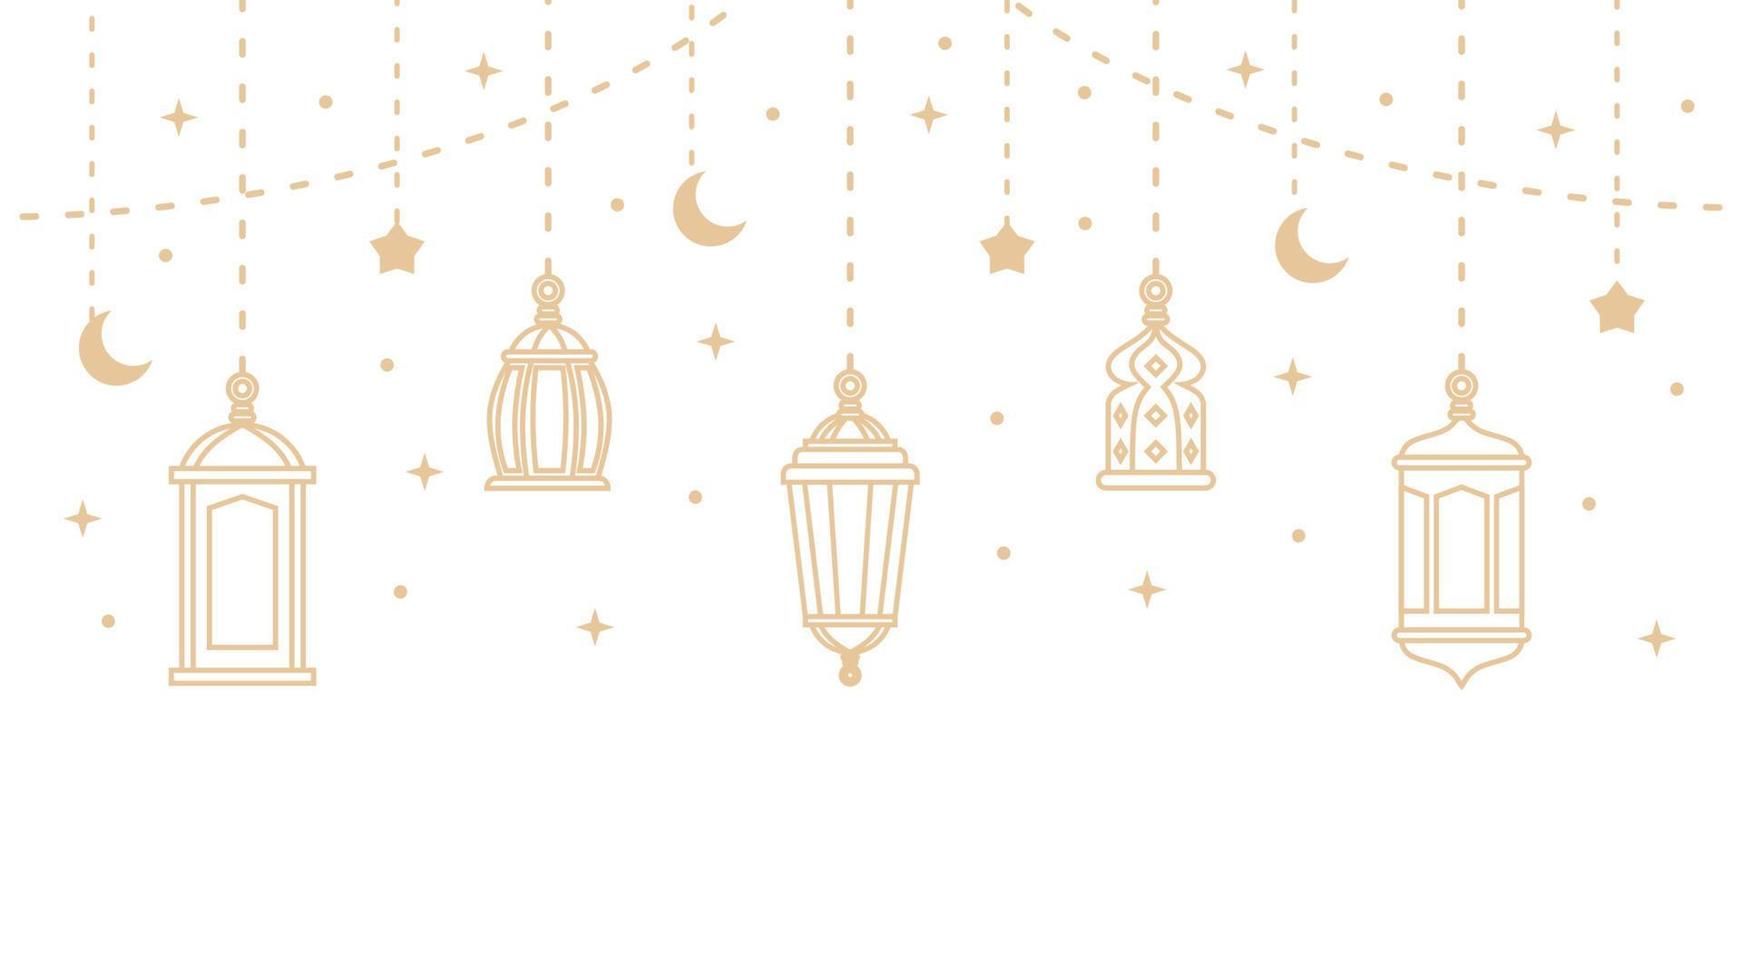 Five hanging ramadan lanterns and islamic ornaments vector